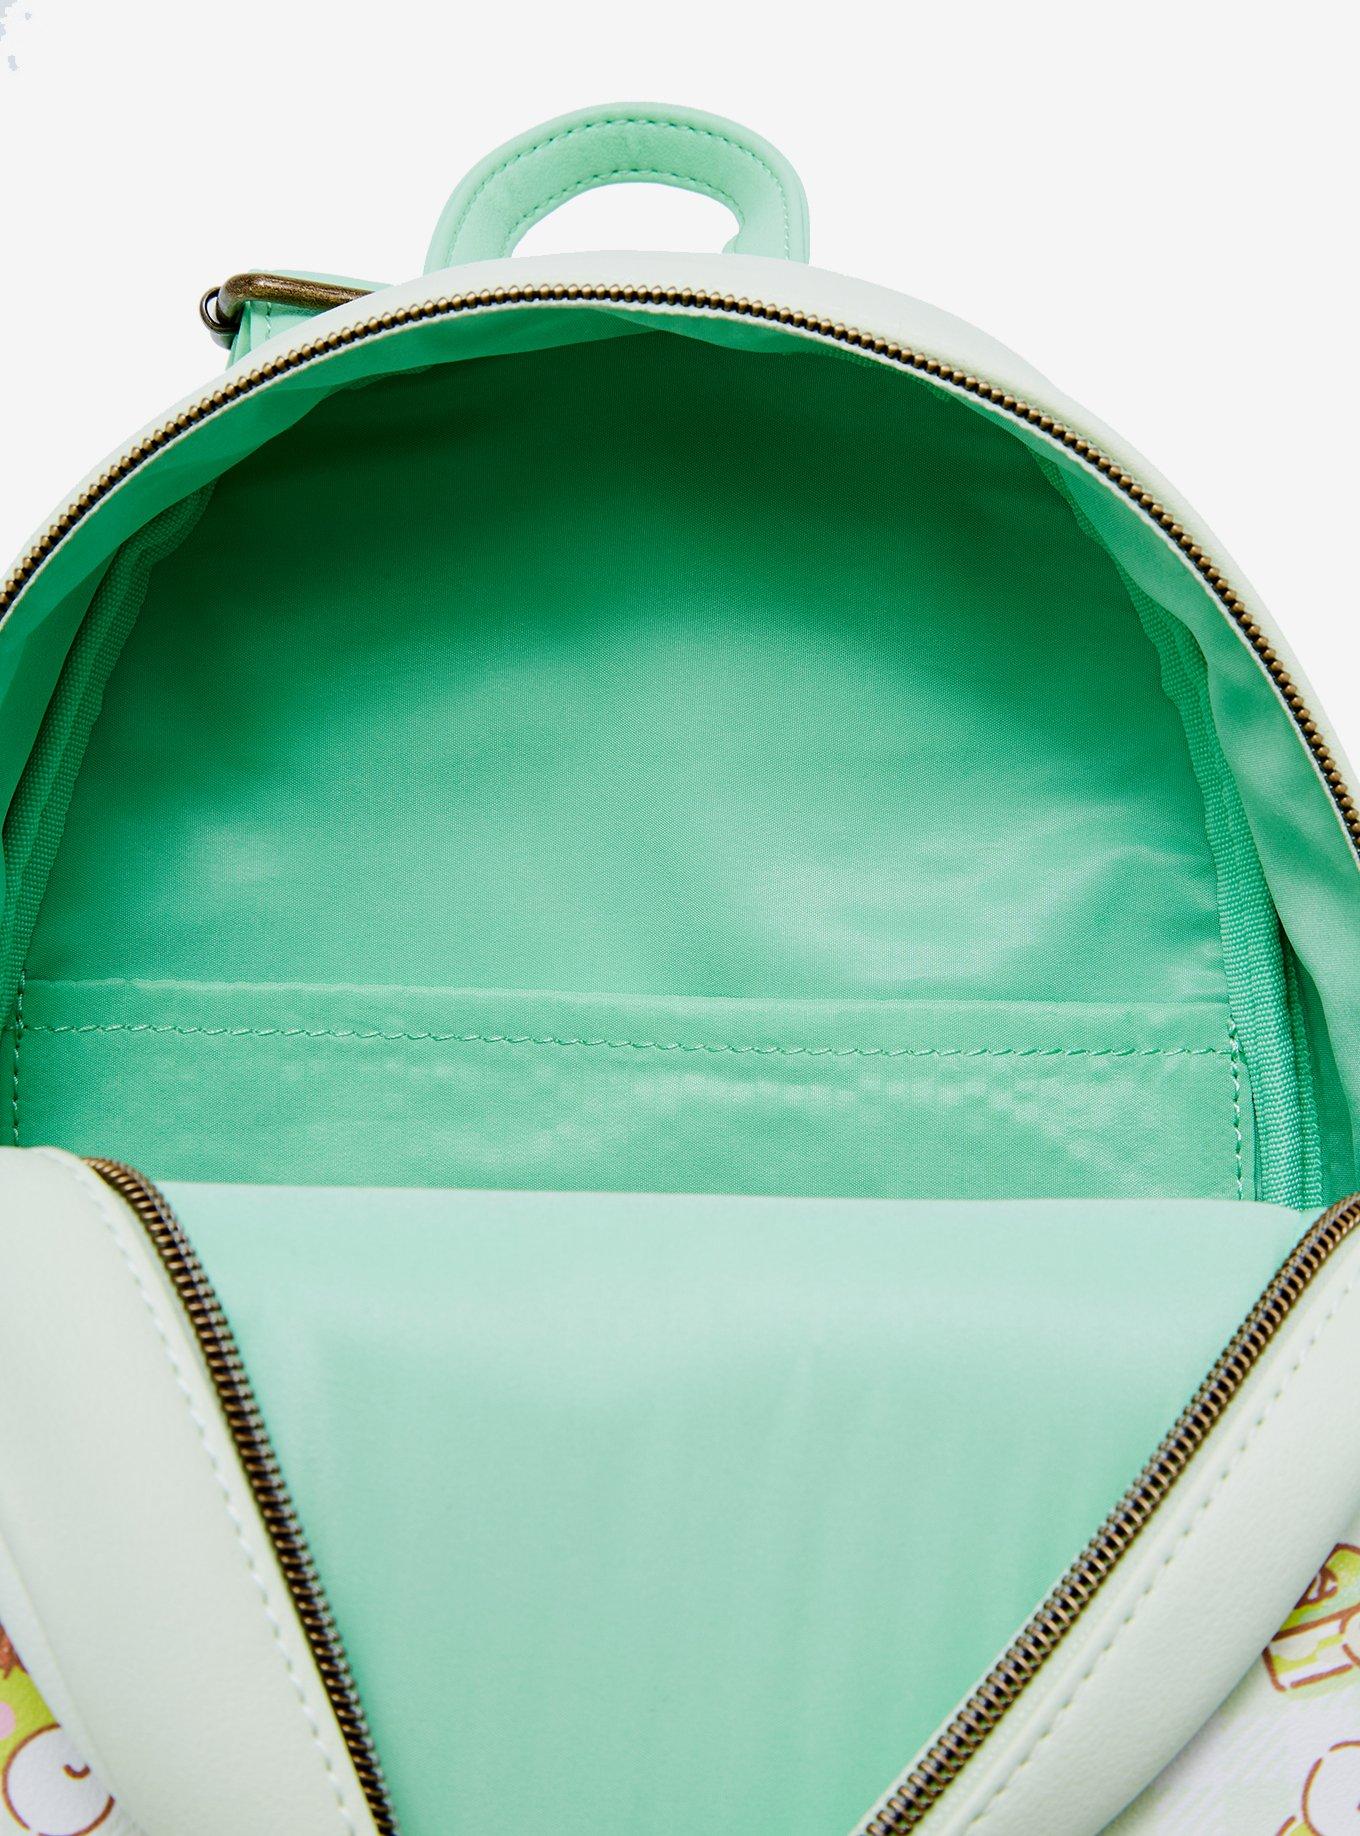 Loungefly Keroppi Snacks Mini Backpack, , alternate